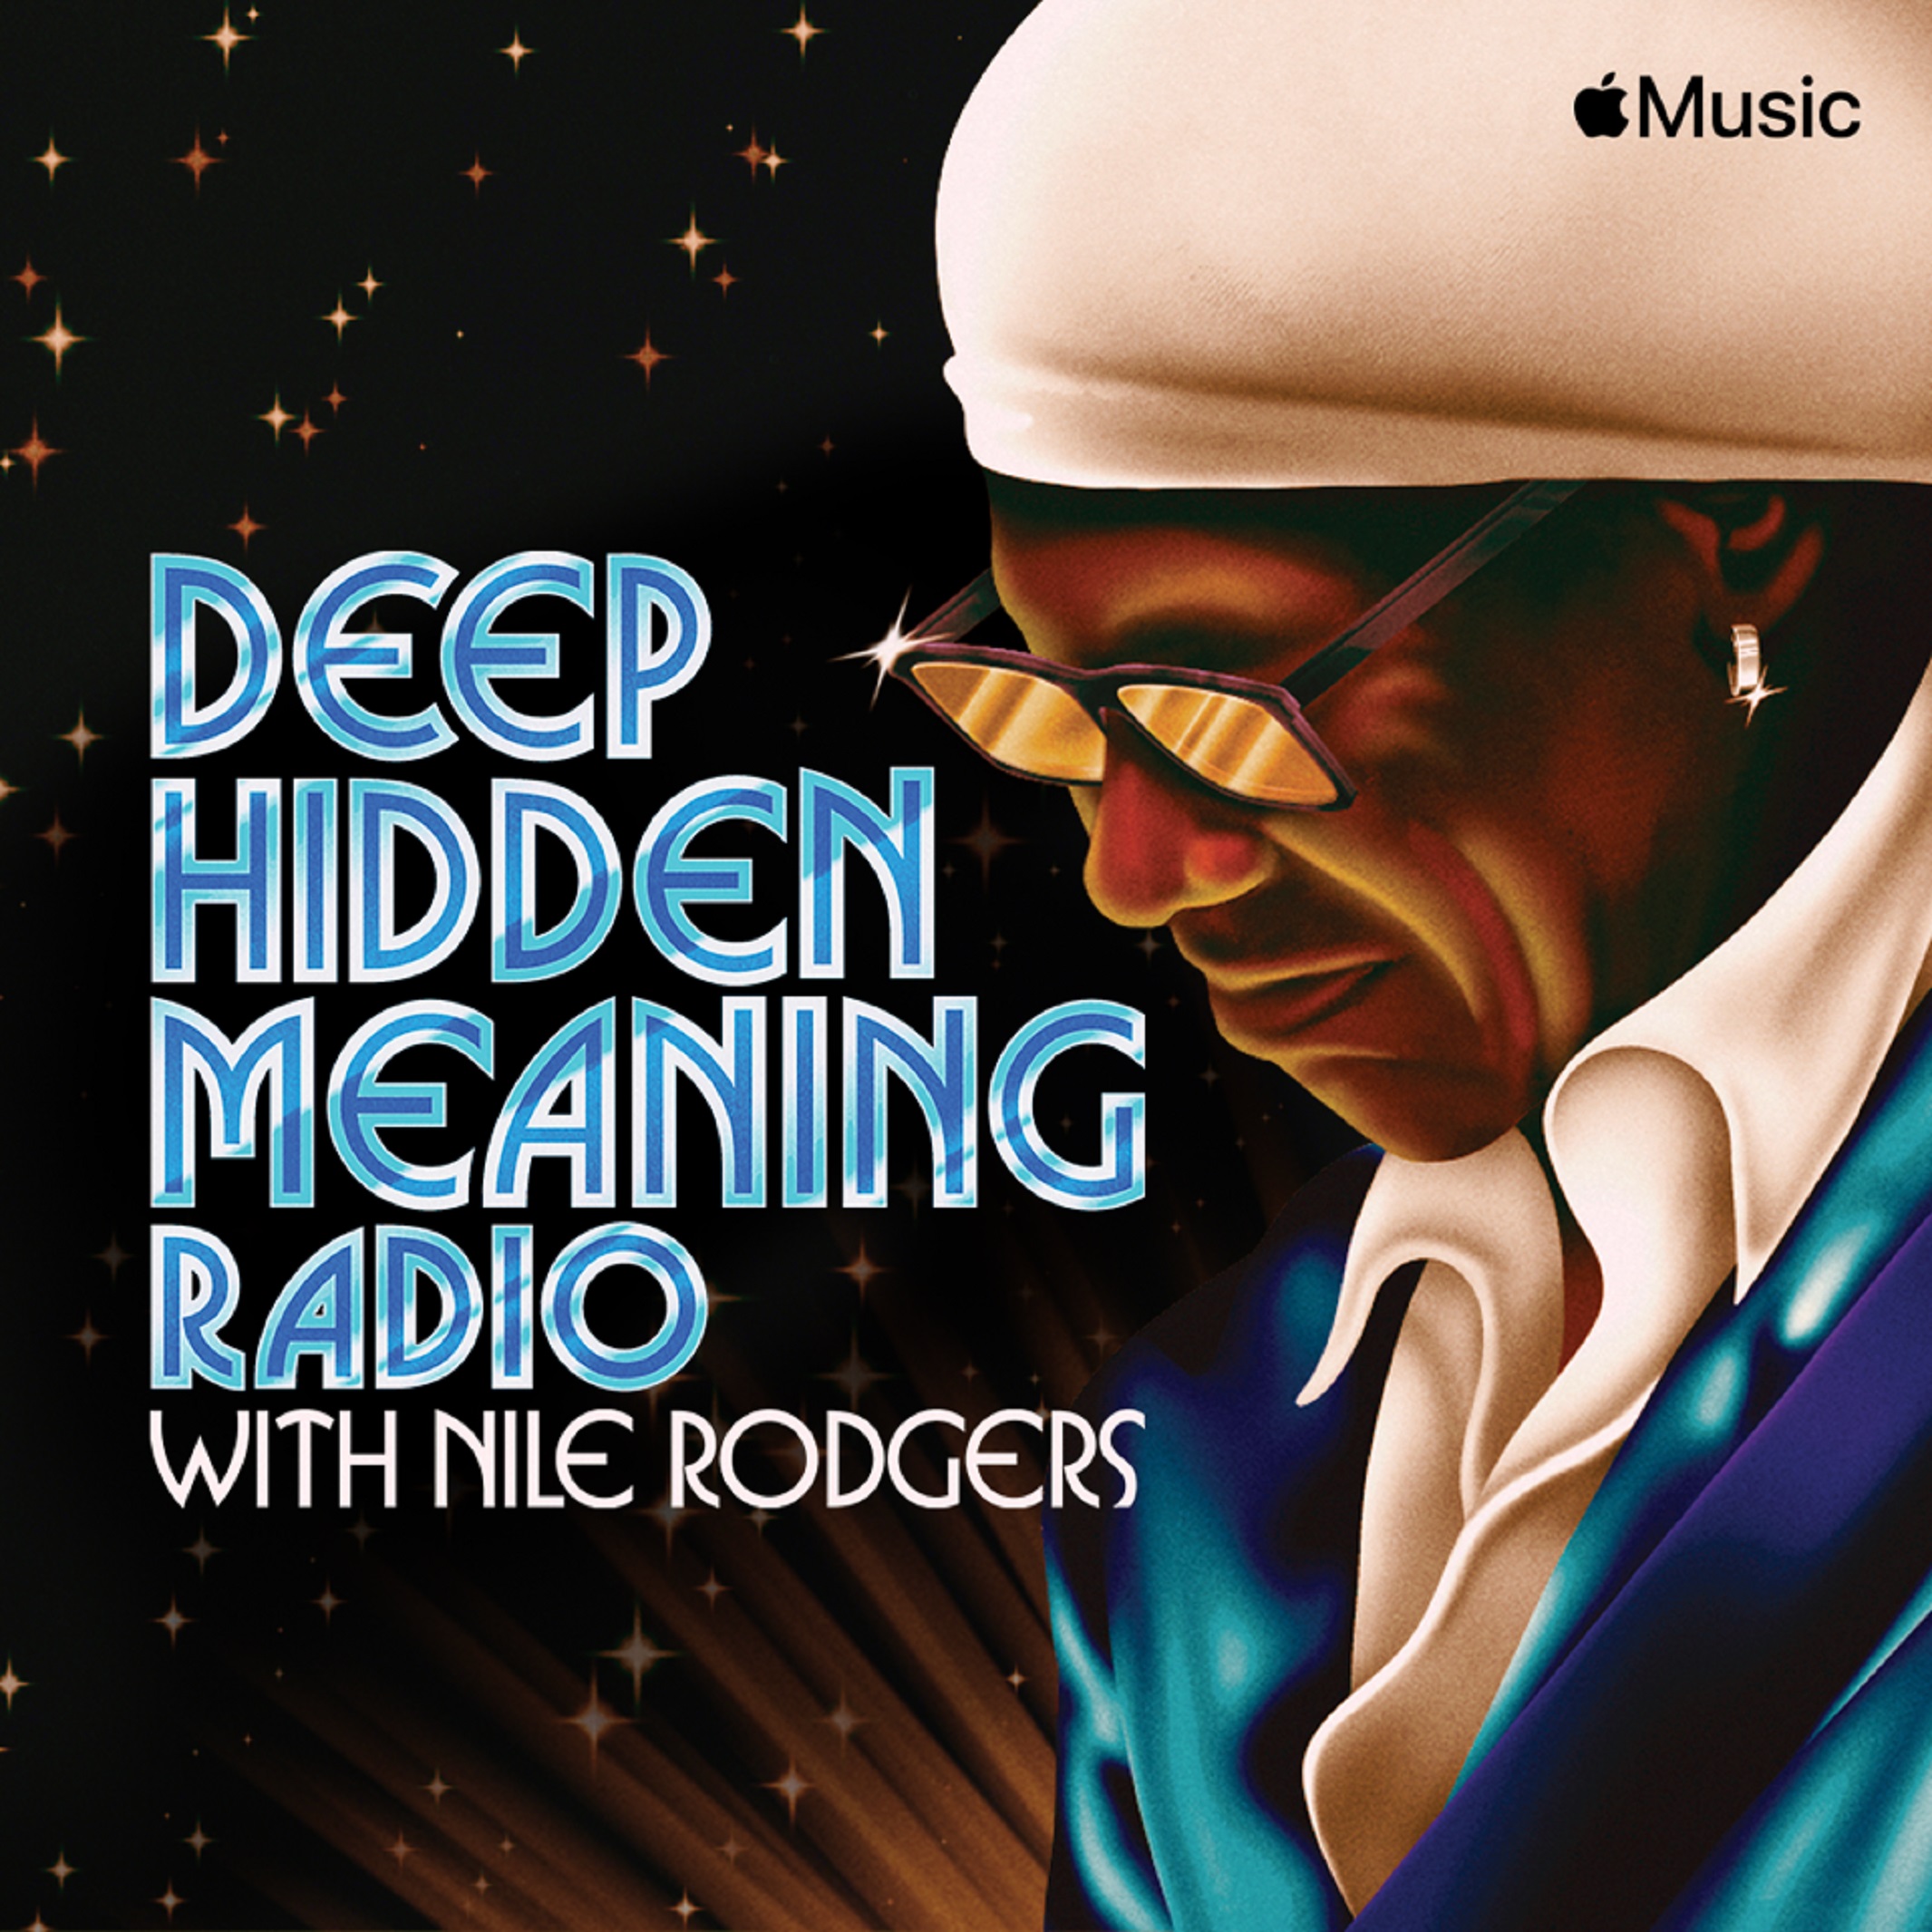 Rod Stewart joins Nile Rodgers on Deep Hidden Meaning Radio on Apple Music 1